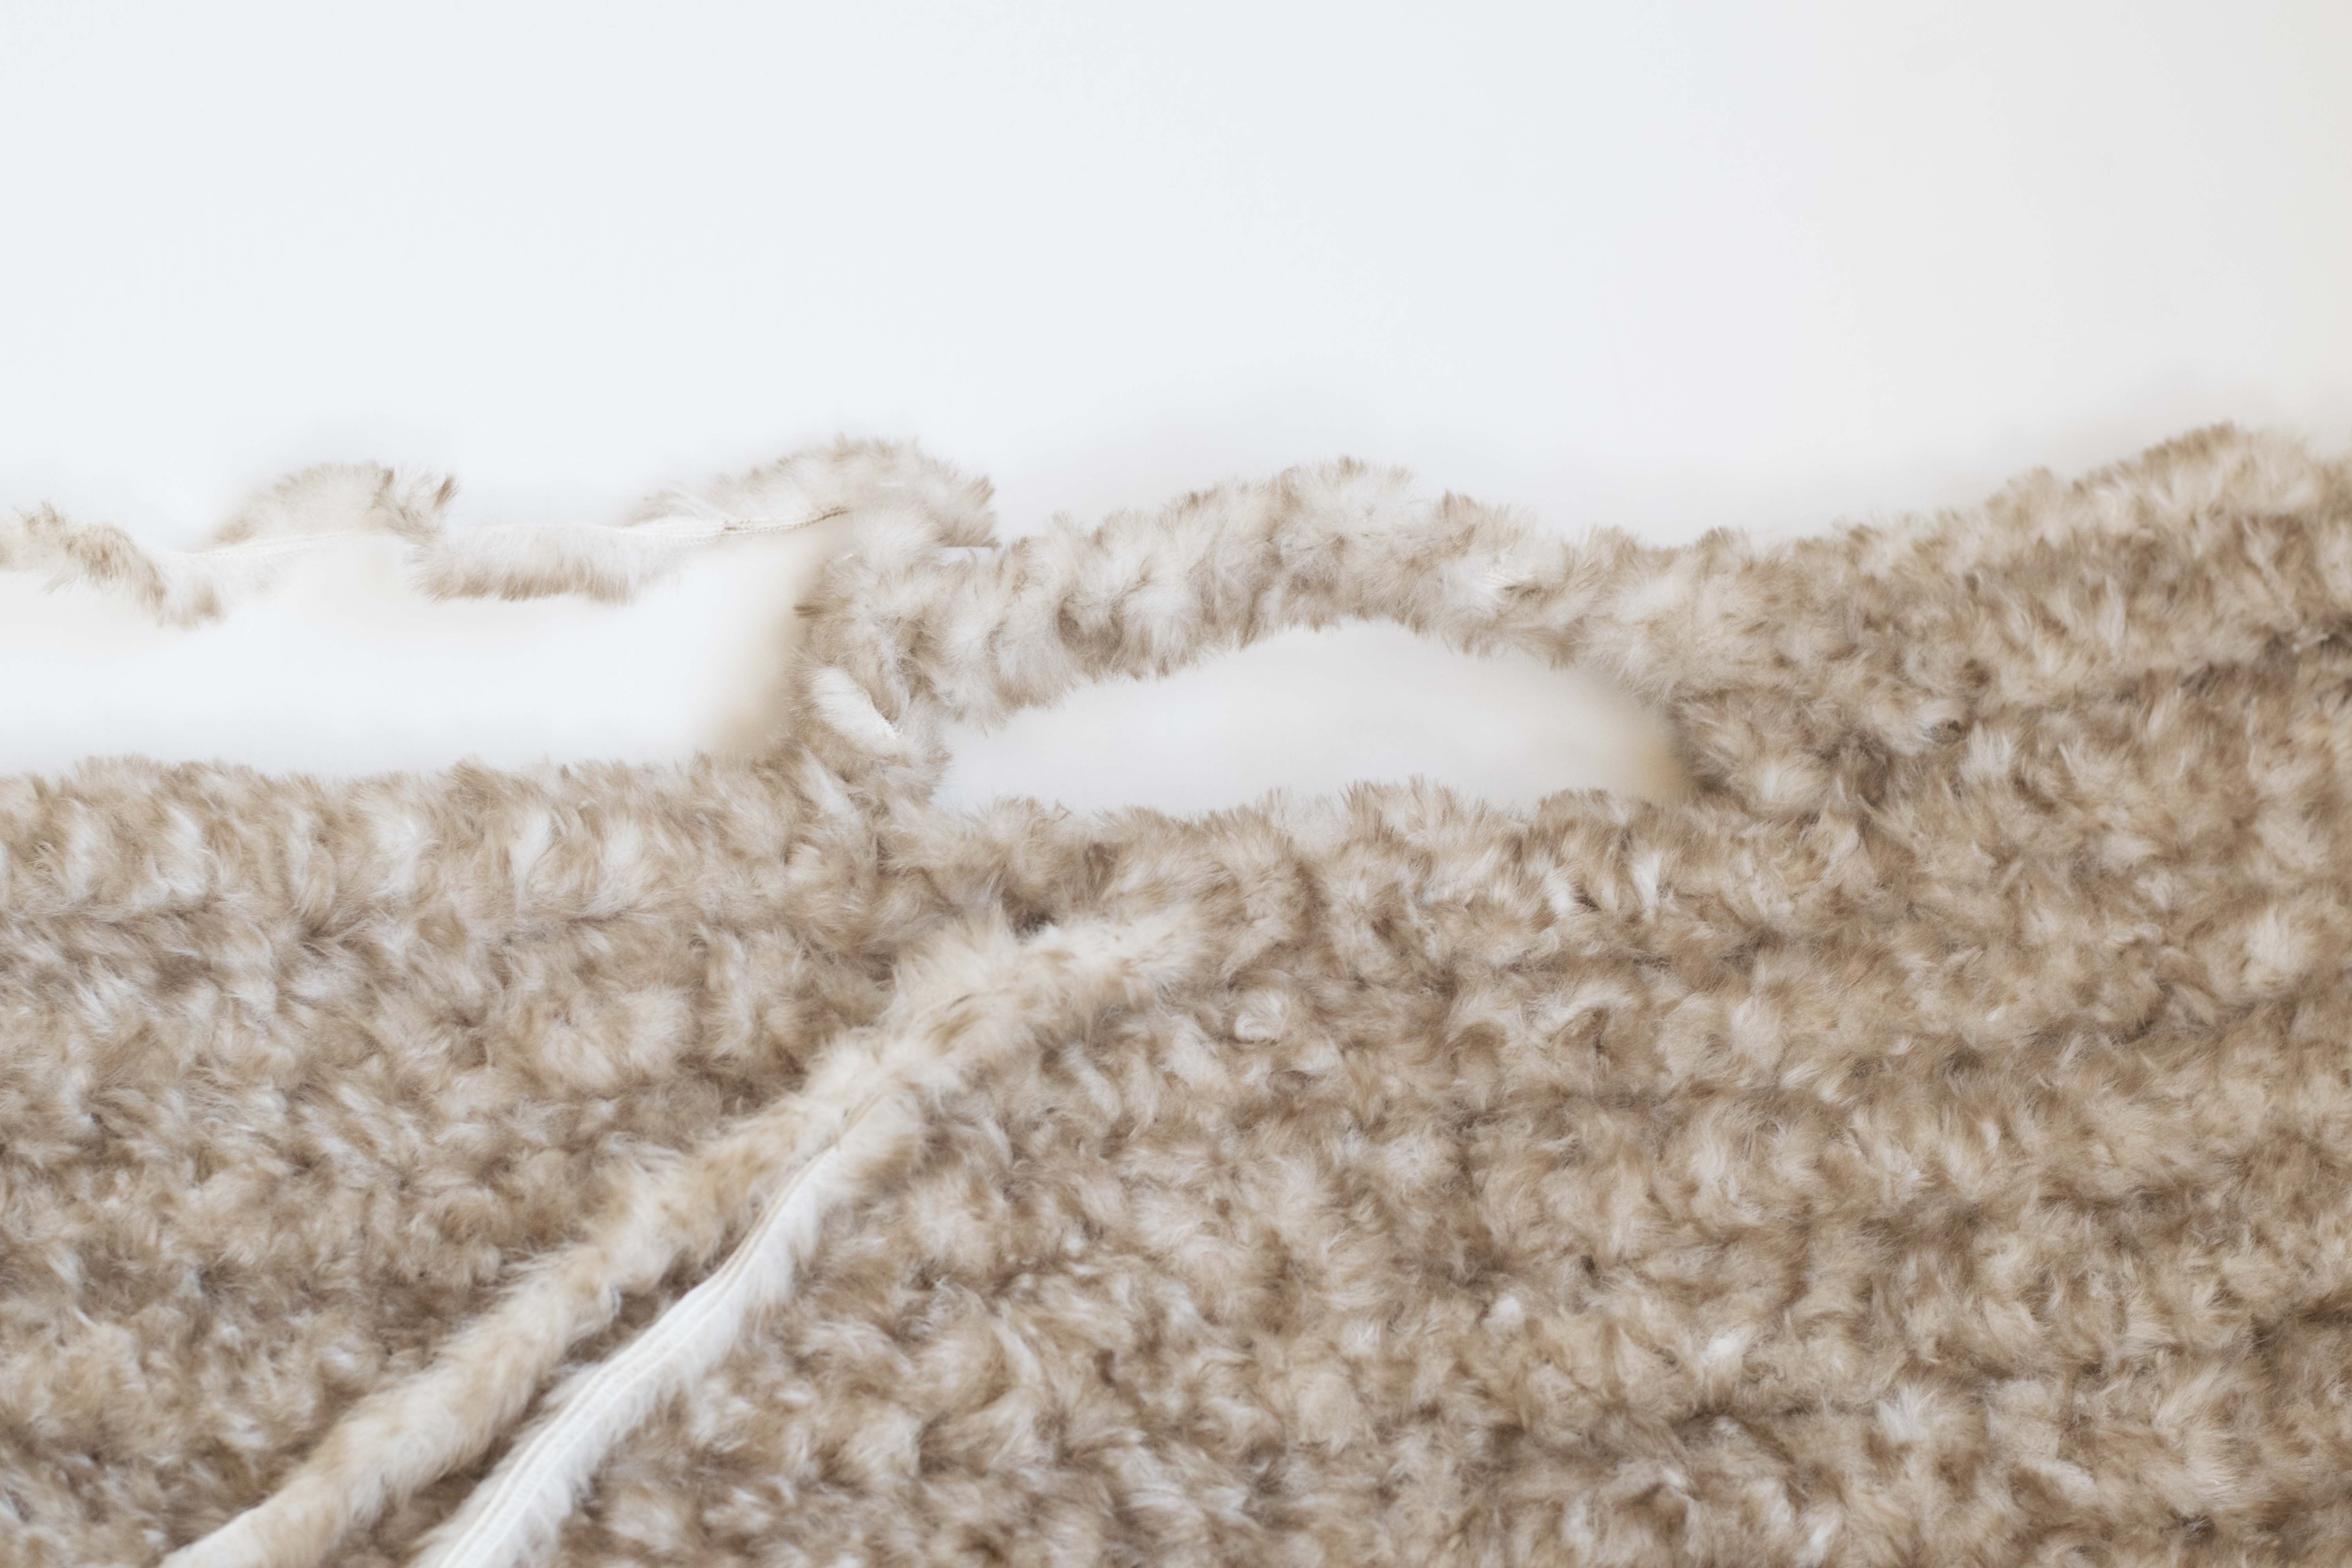 How To Crochet A Crossed Fur Headband Ear Warmer – Mama In A Stitch